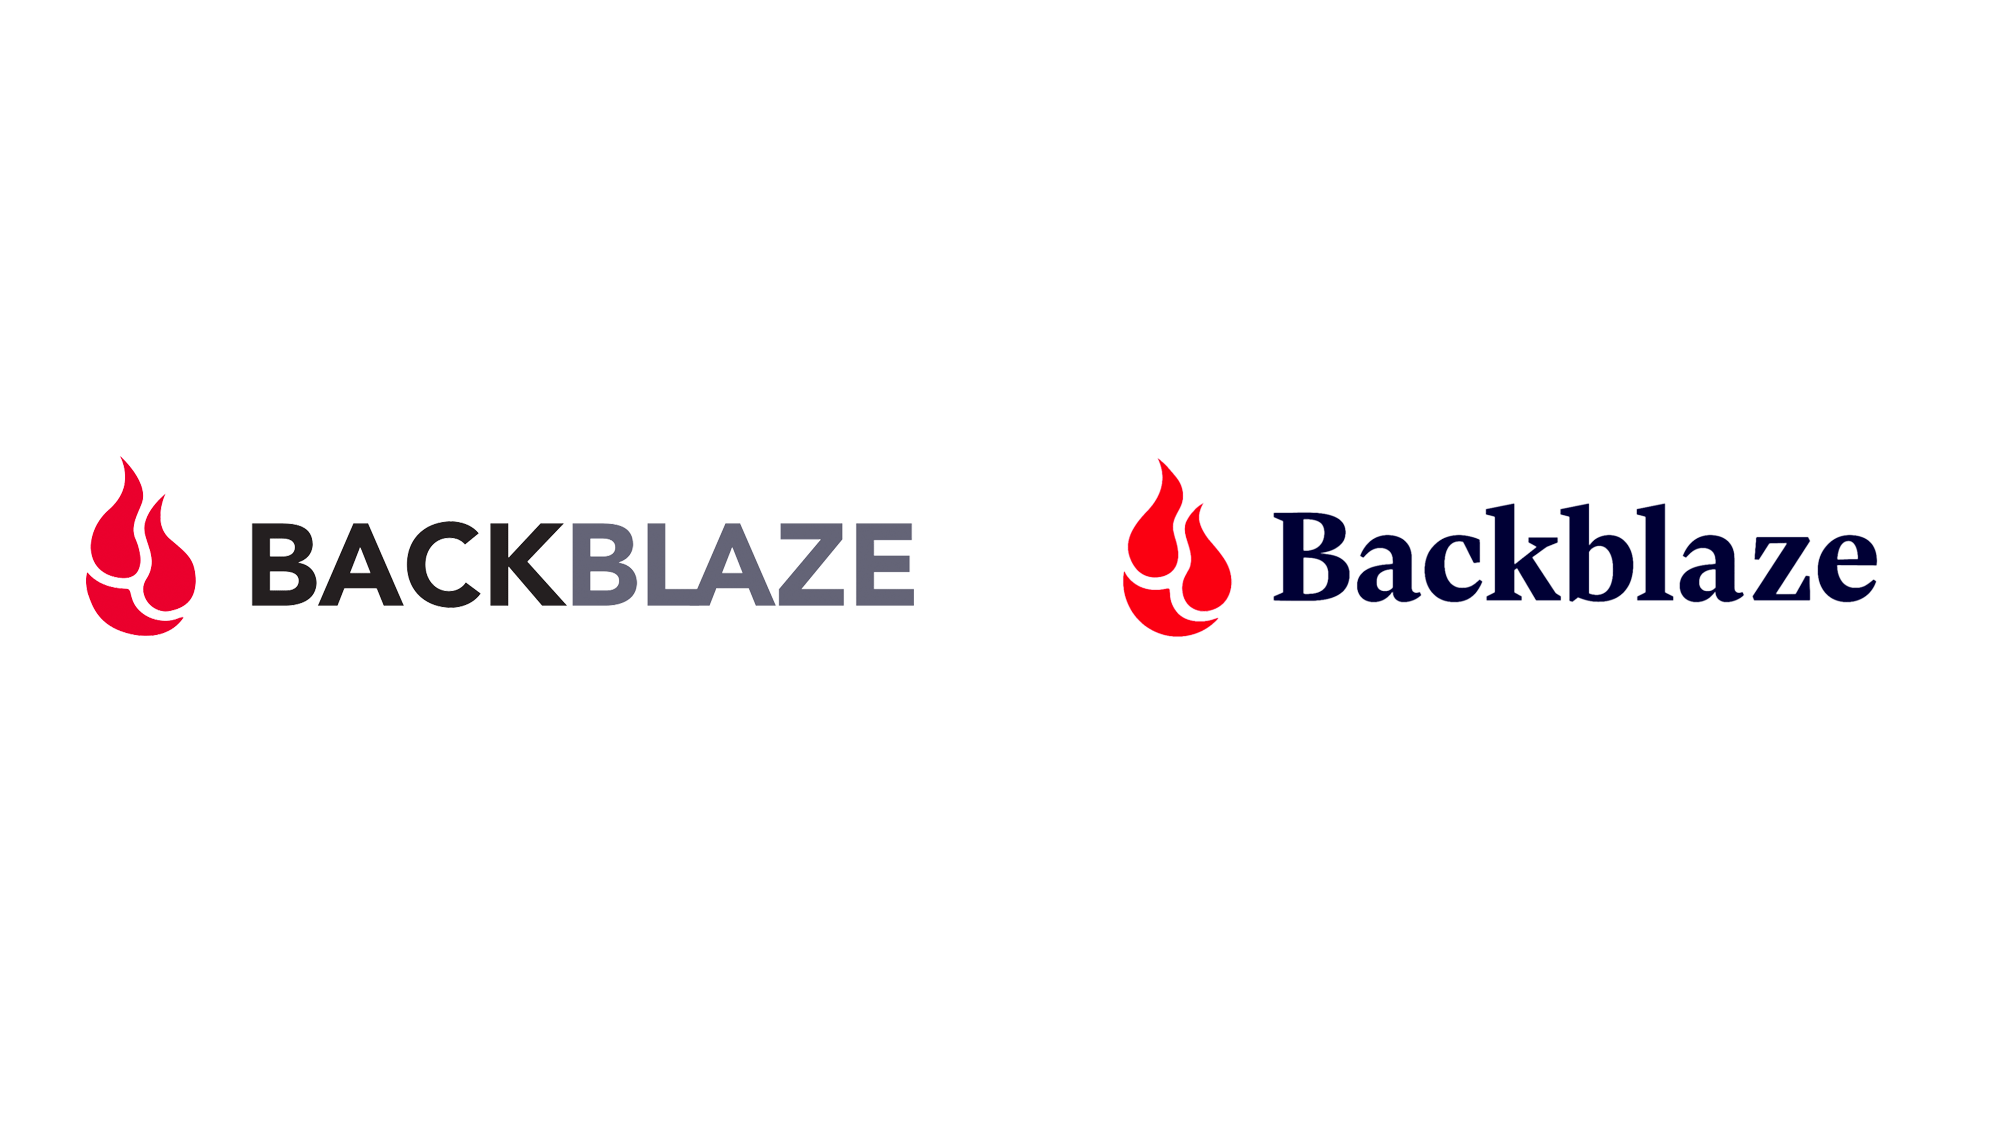 backblaze raises subscription pricing